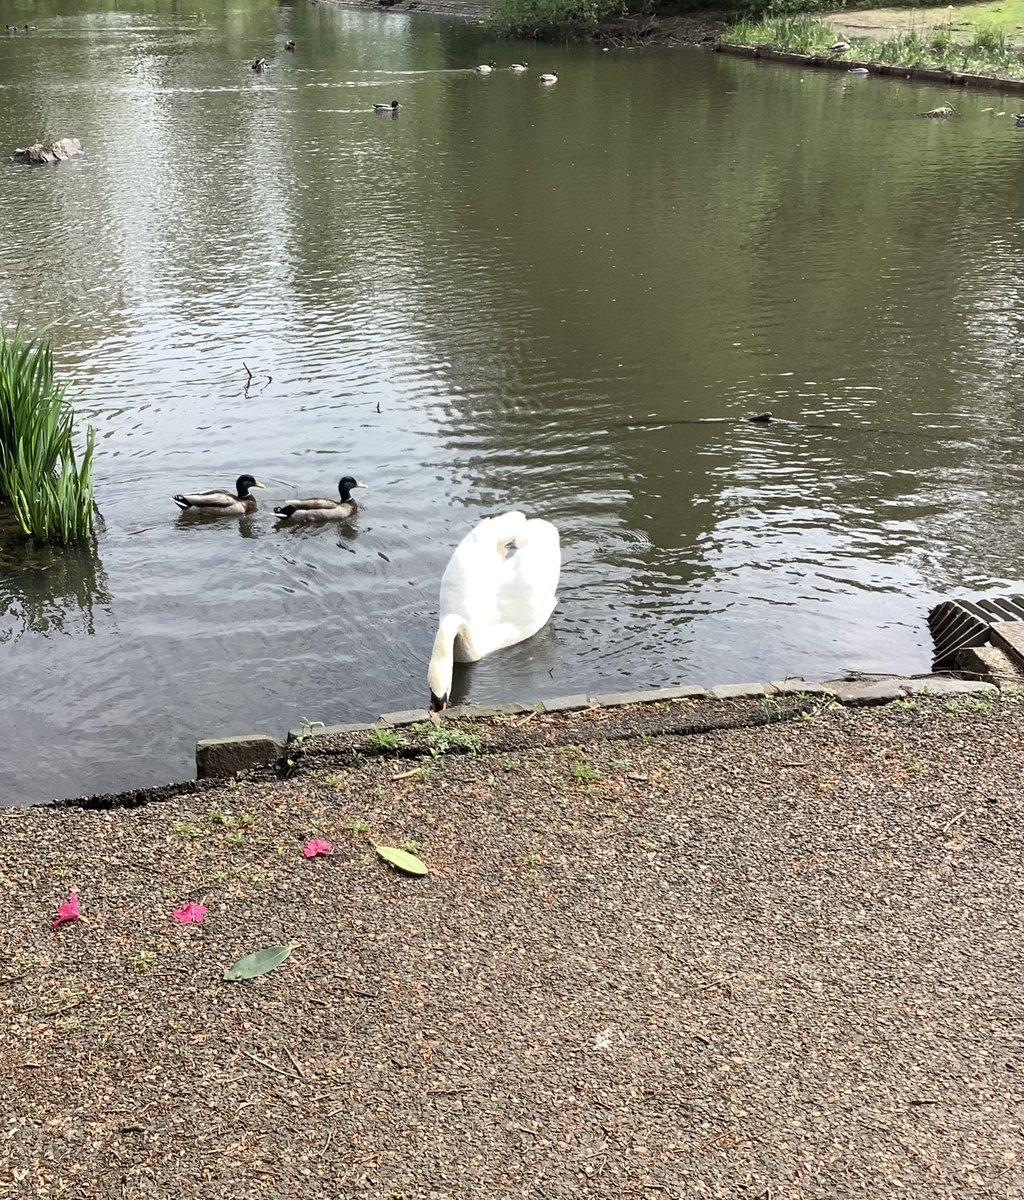 #promoteperth swan feeding at edge of the pond.#BrandMcKinnon.

#photoblog